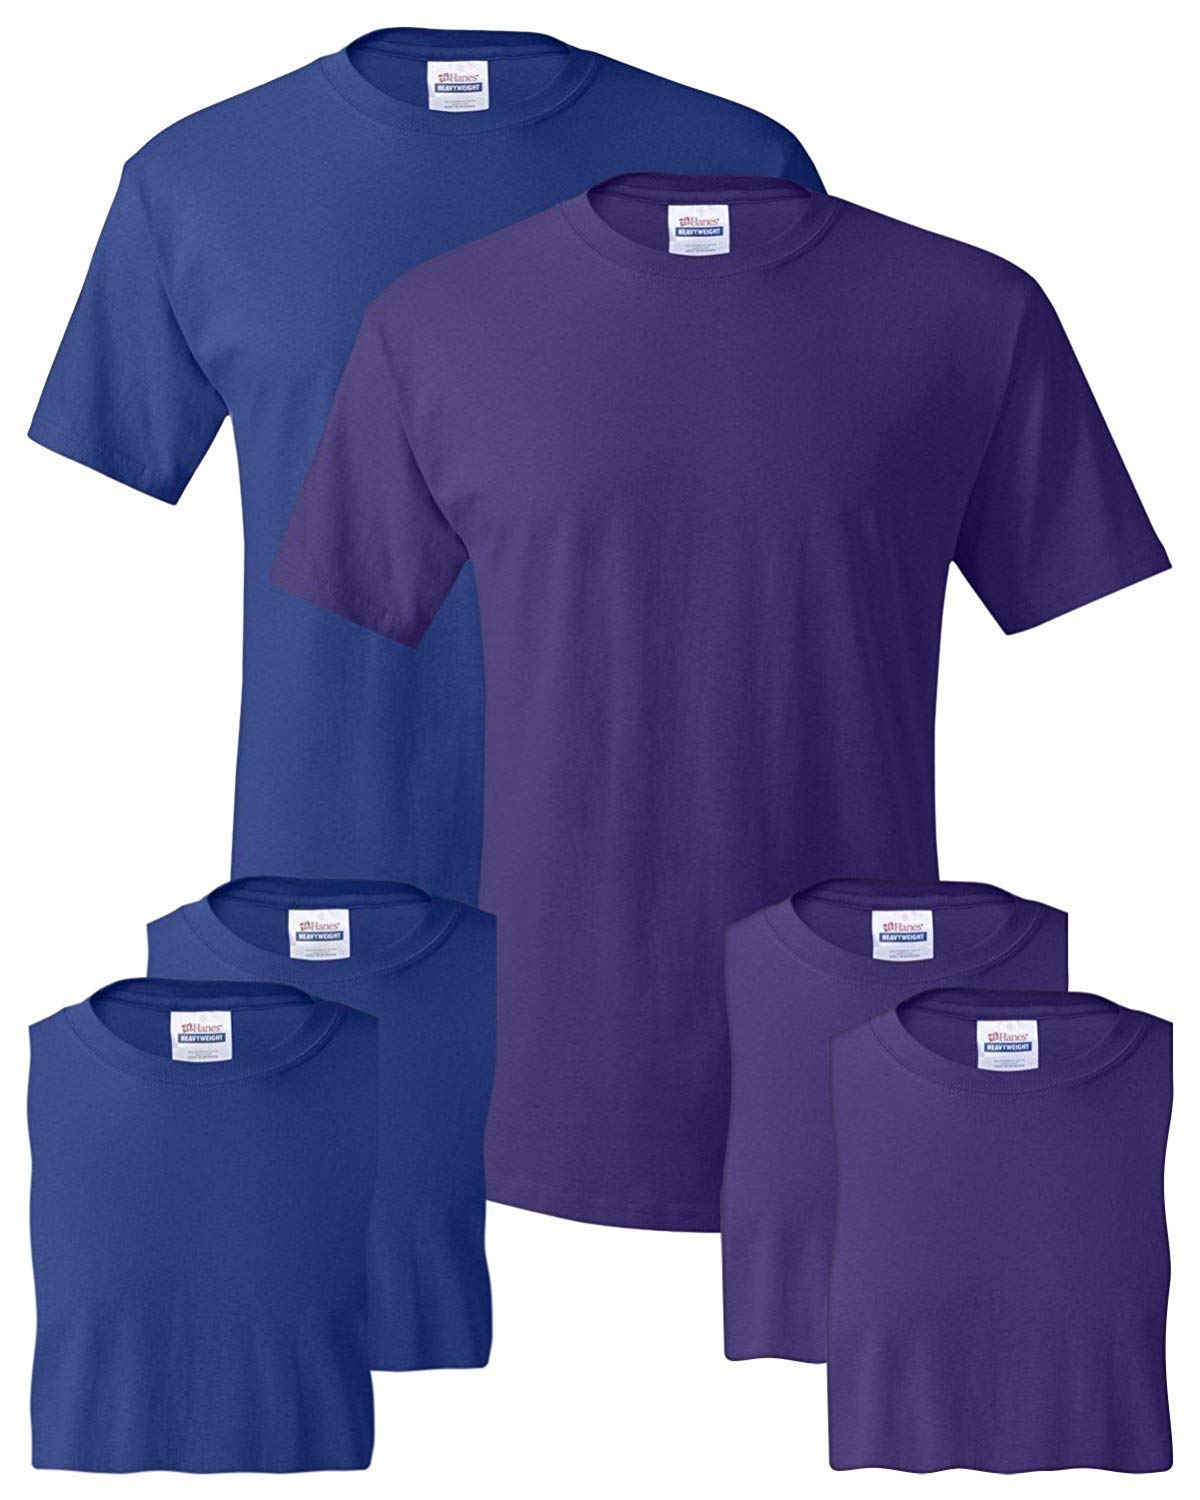 Hanes mens 5.2 oz. ComfortSoft Cotton T-Shirt(5280)-DEEP ROYAL/PURPLE-2XL-3PK